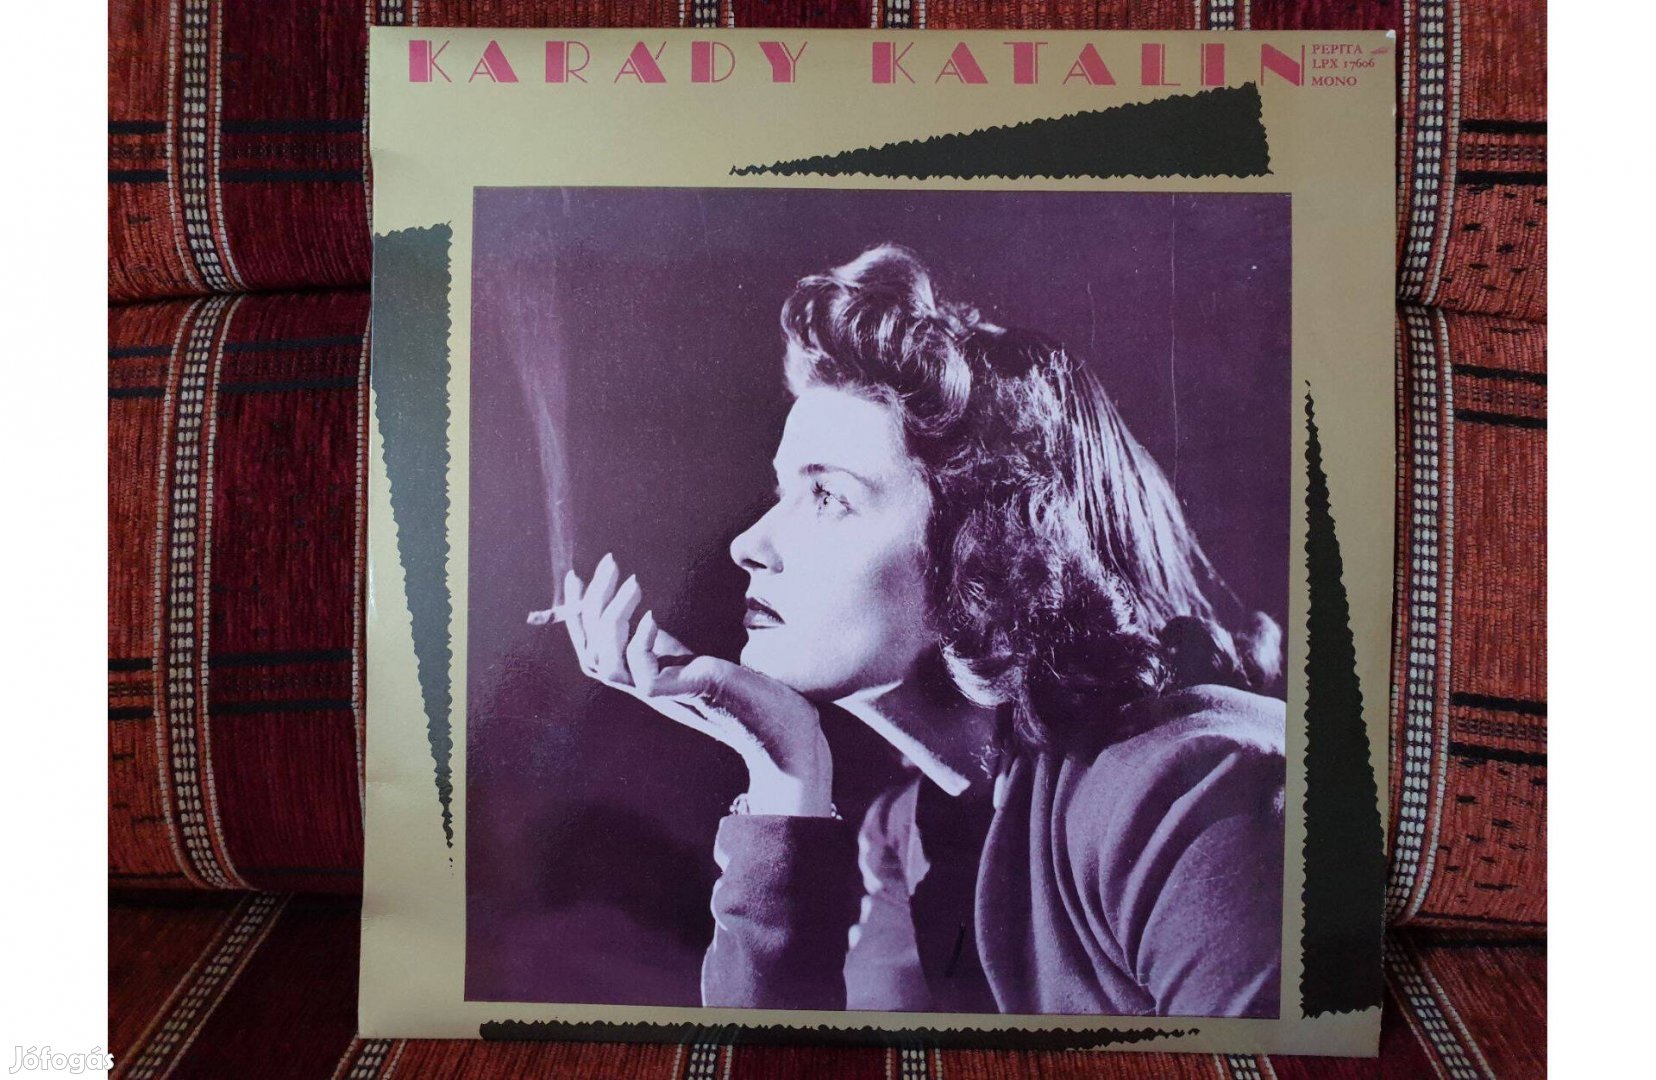 Karády Katalin hanglemez bakelit lemez Vinyl